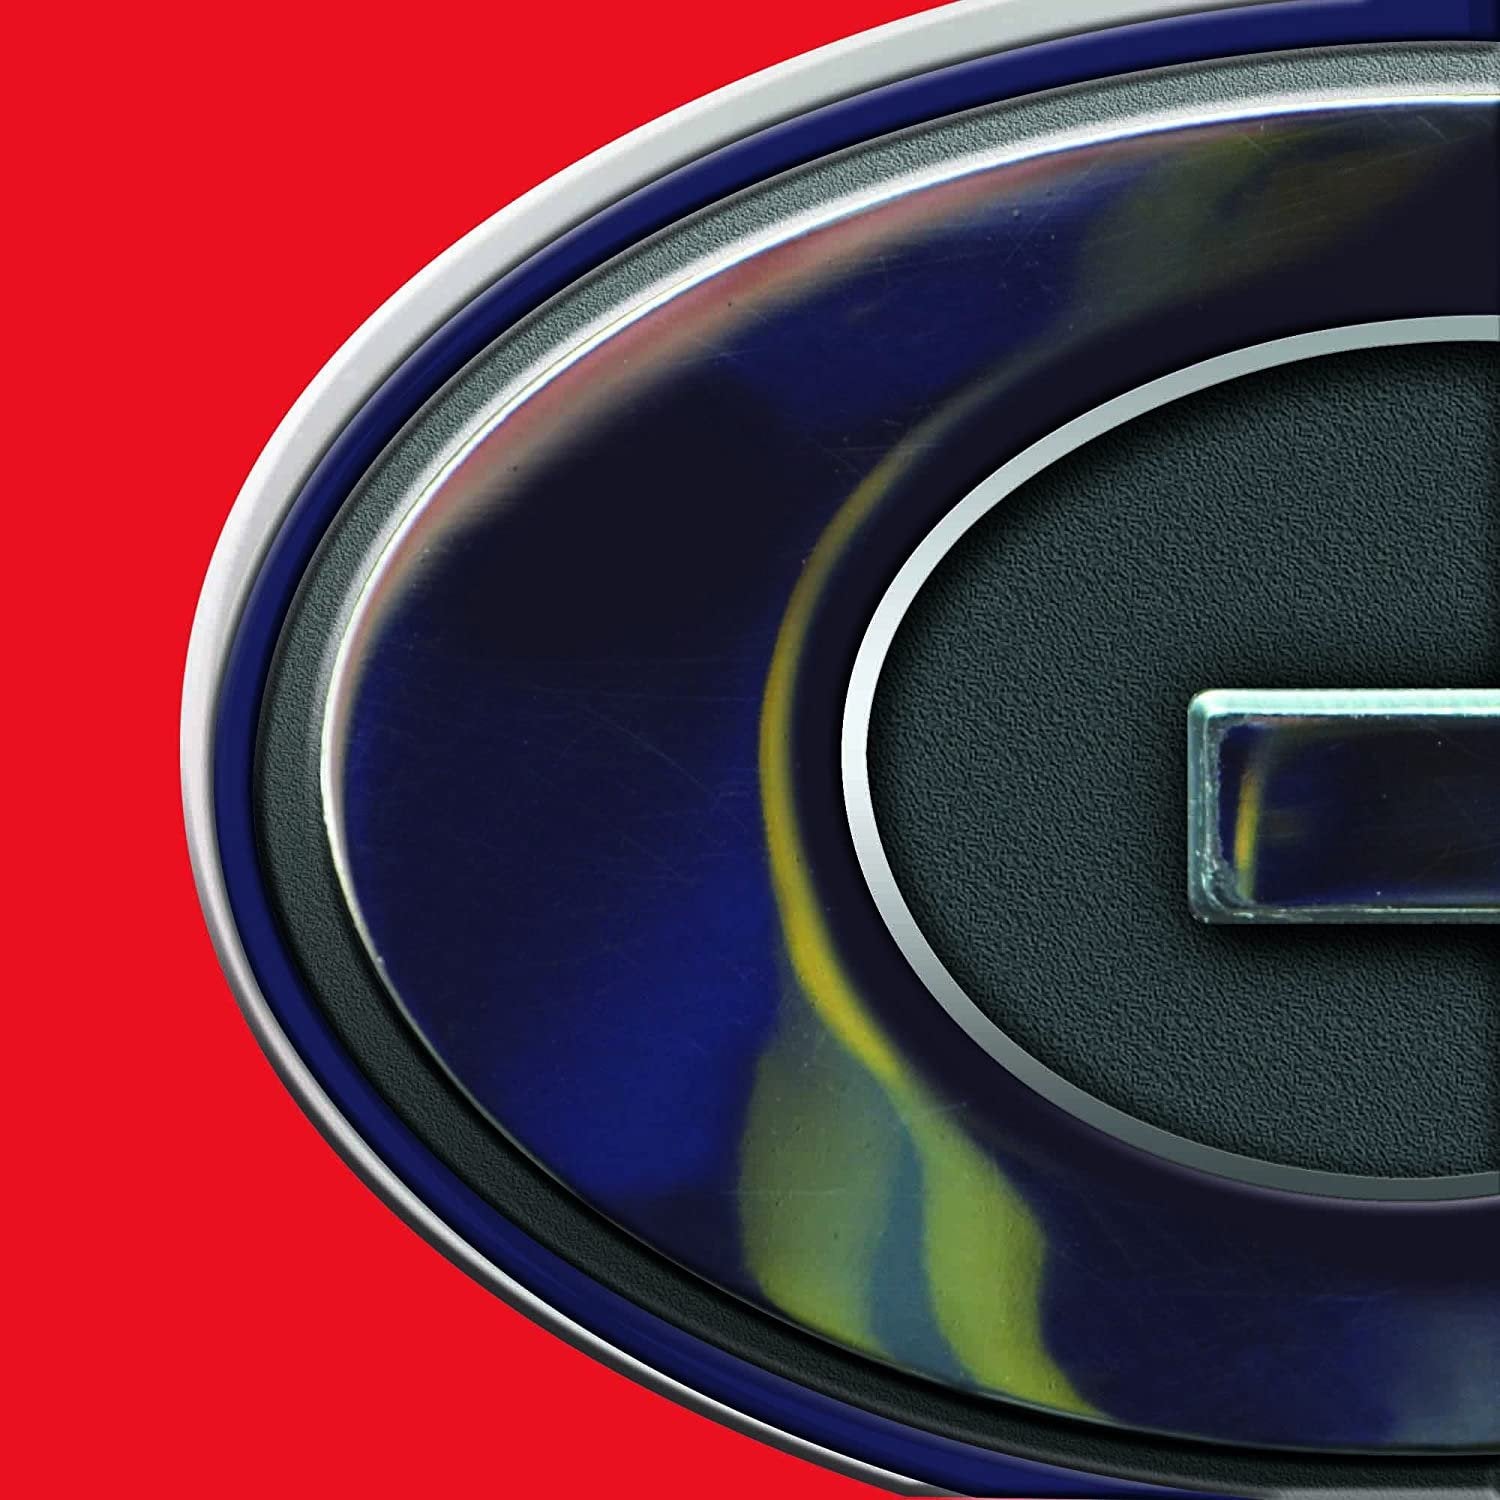 Atlanta Hawks Premium Solid Metal Raised Auto Emblem, Shape Cut, Adhesive Backing